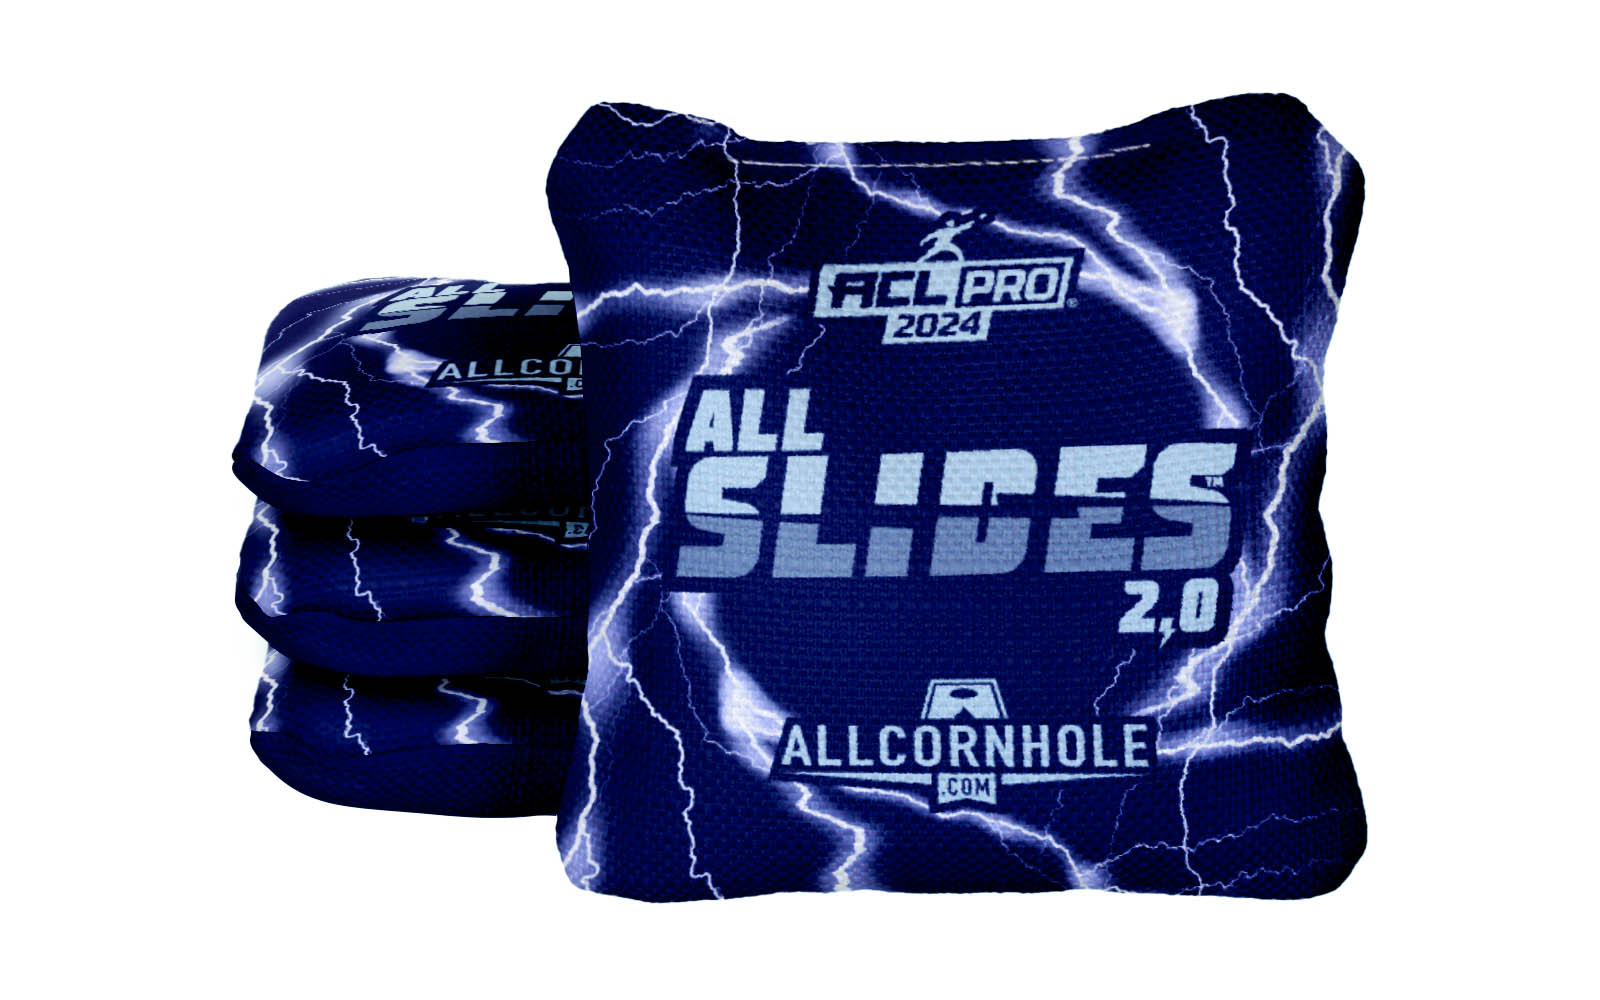 Officially Licensed Collegiate Cornhole Bags - AllCornhole All-Slide 2.0 - Set of 4 - University of North Carolina